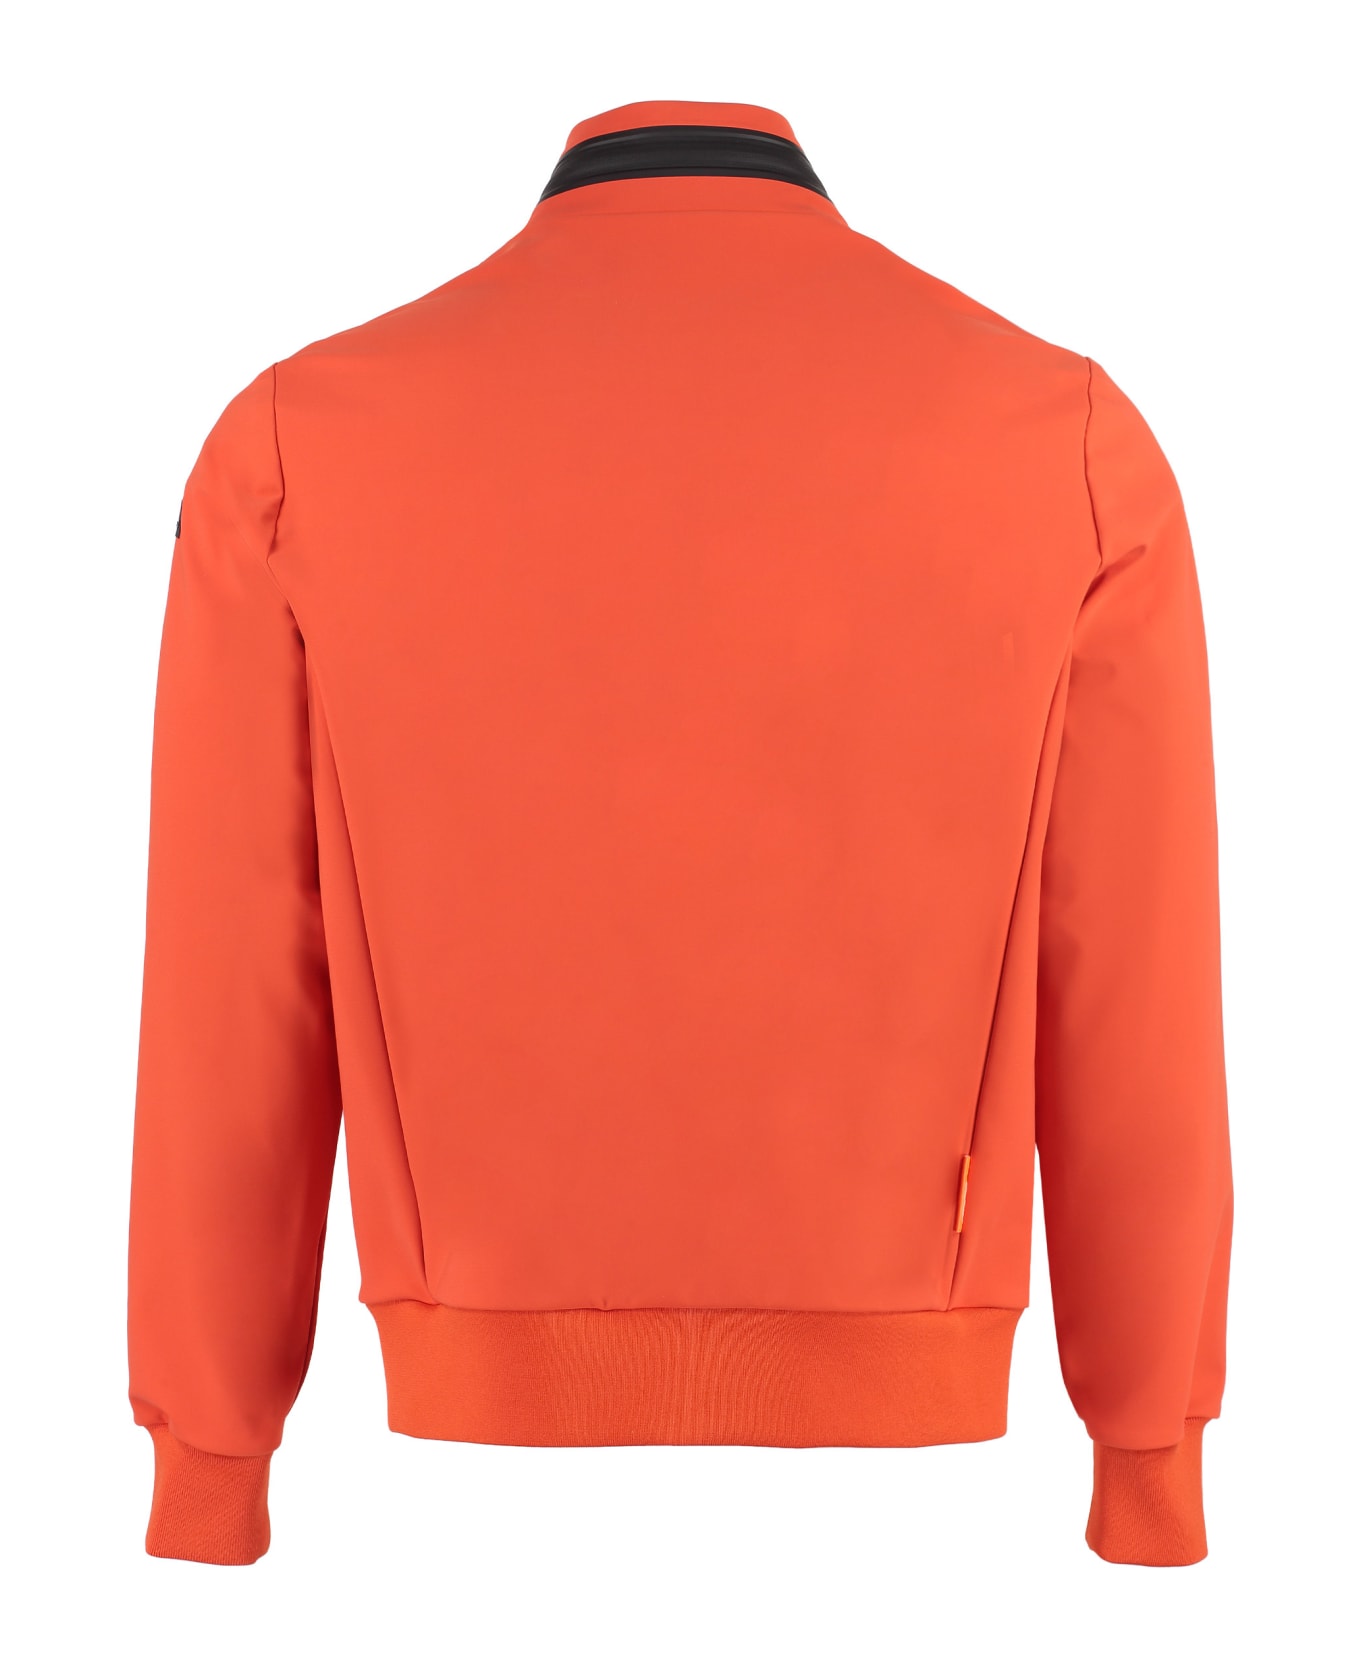 RRD - Roberto Ricci Design Techno Fabric Jacket - Orange